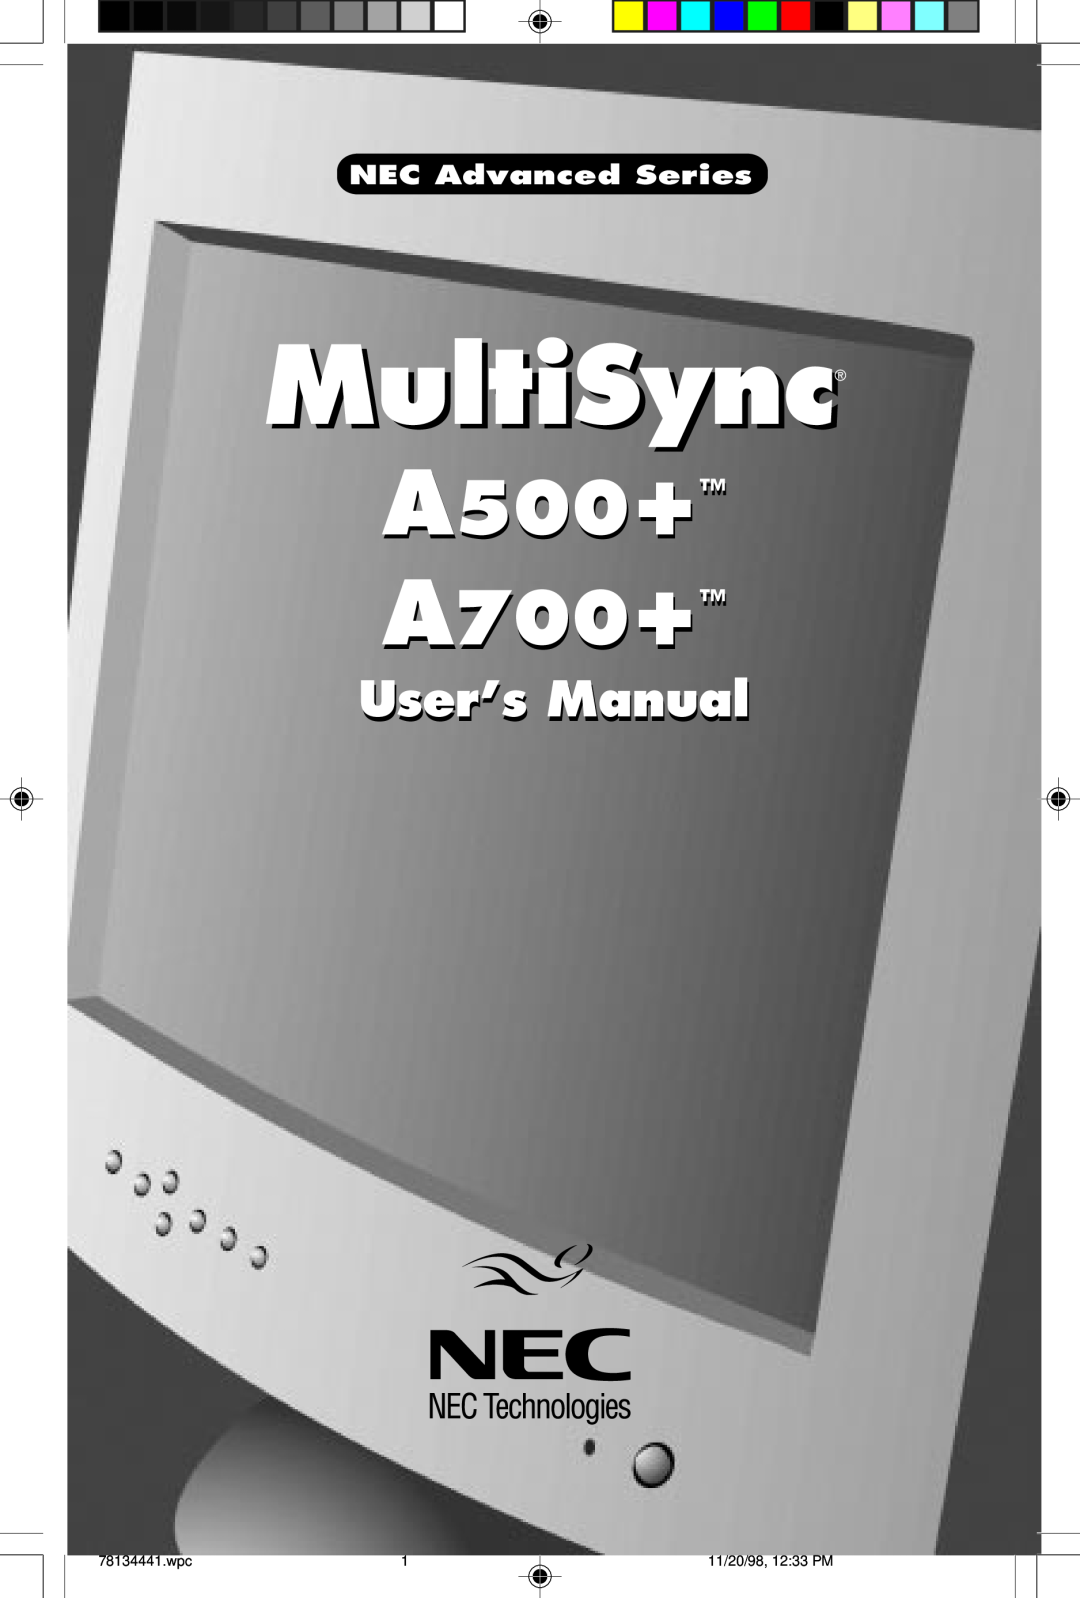 NEC A700+TM user manual User’s Manual, MultiSync, A500+ A700+, NEC Advanced Series, 78134441.wpc, 11/20/98, 1233 PM 